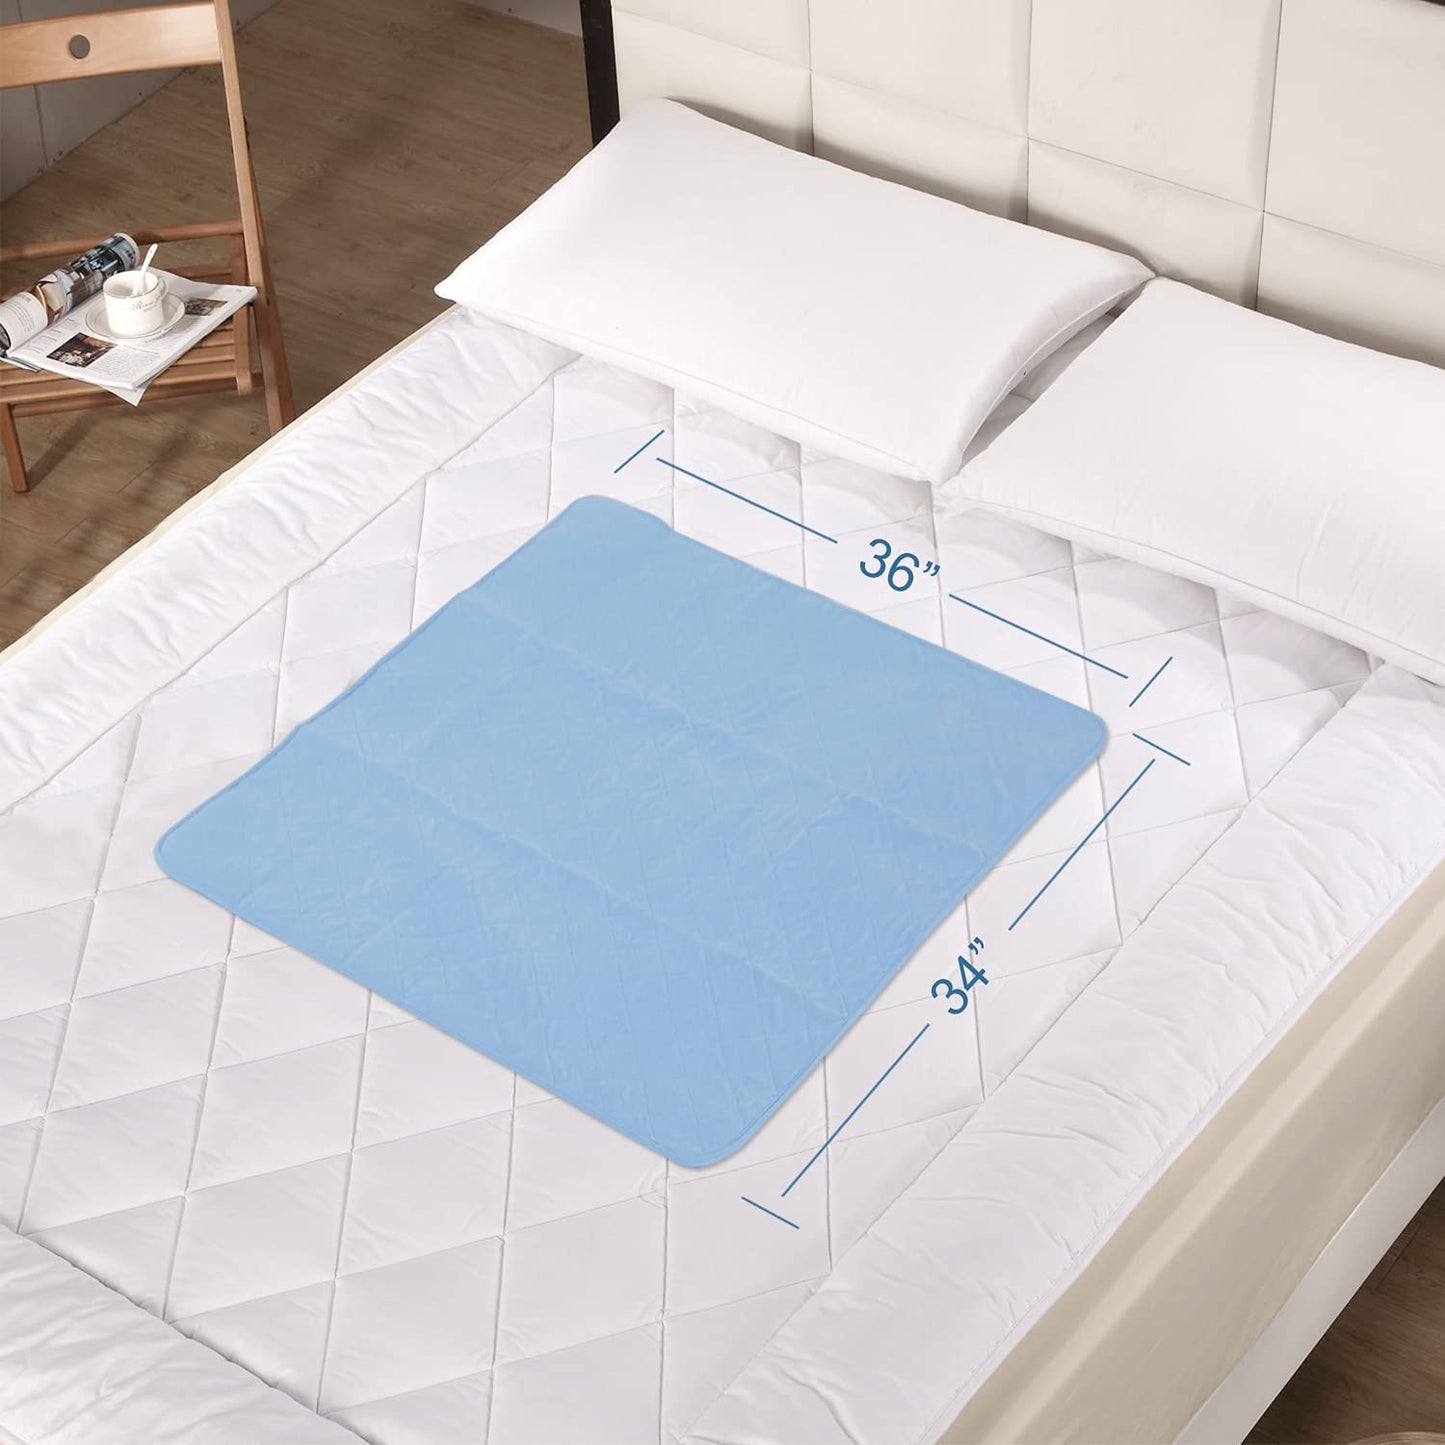 Waterproof Bed Pad/Mat, 34'' x 36'', 2 Pack, Incontinence, Reusable Waterproof Bed Pad